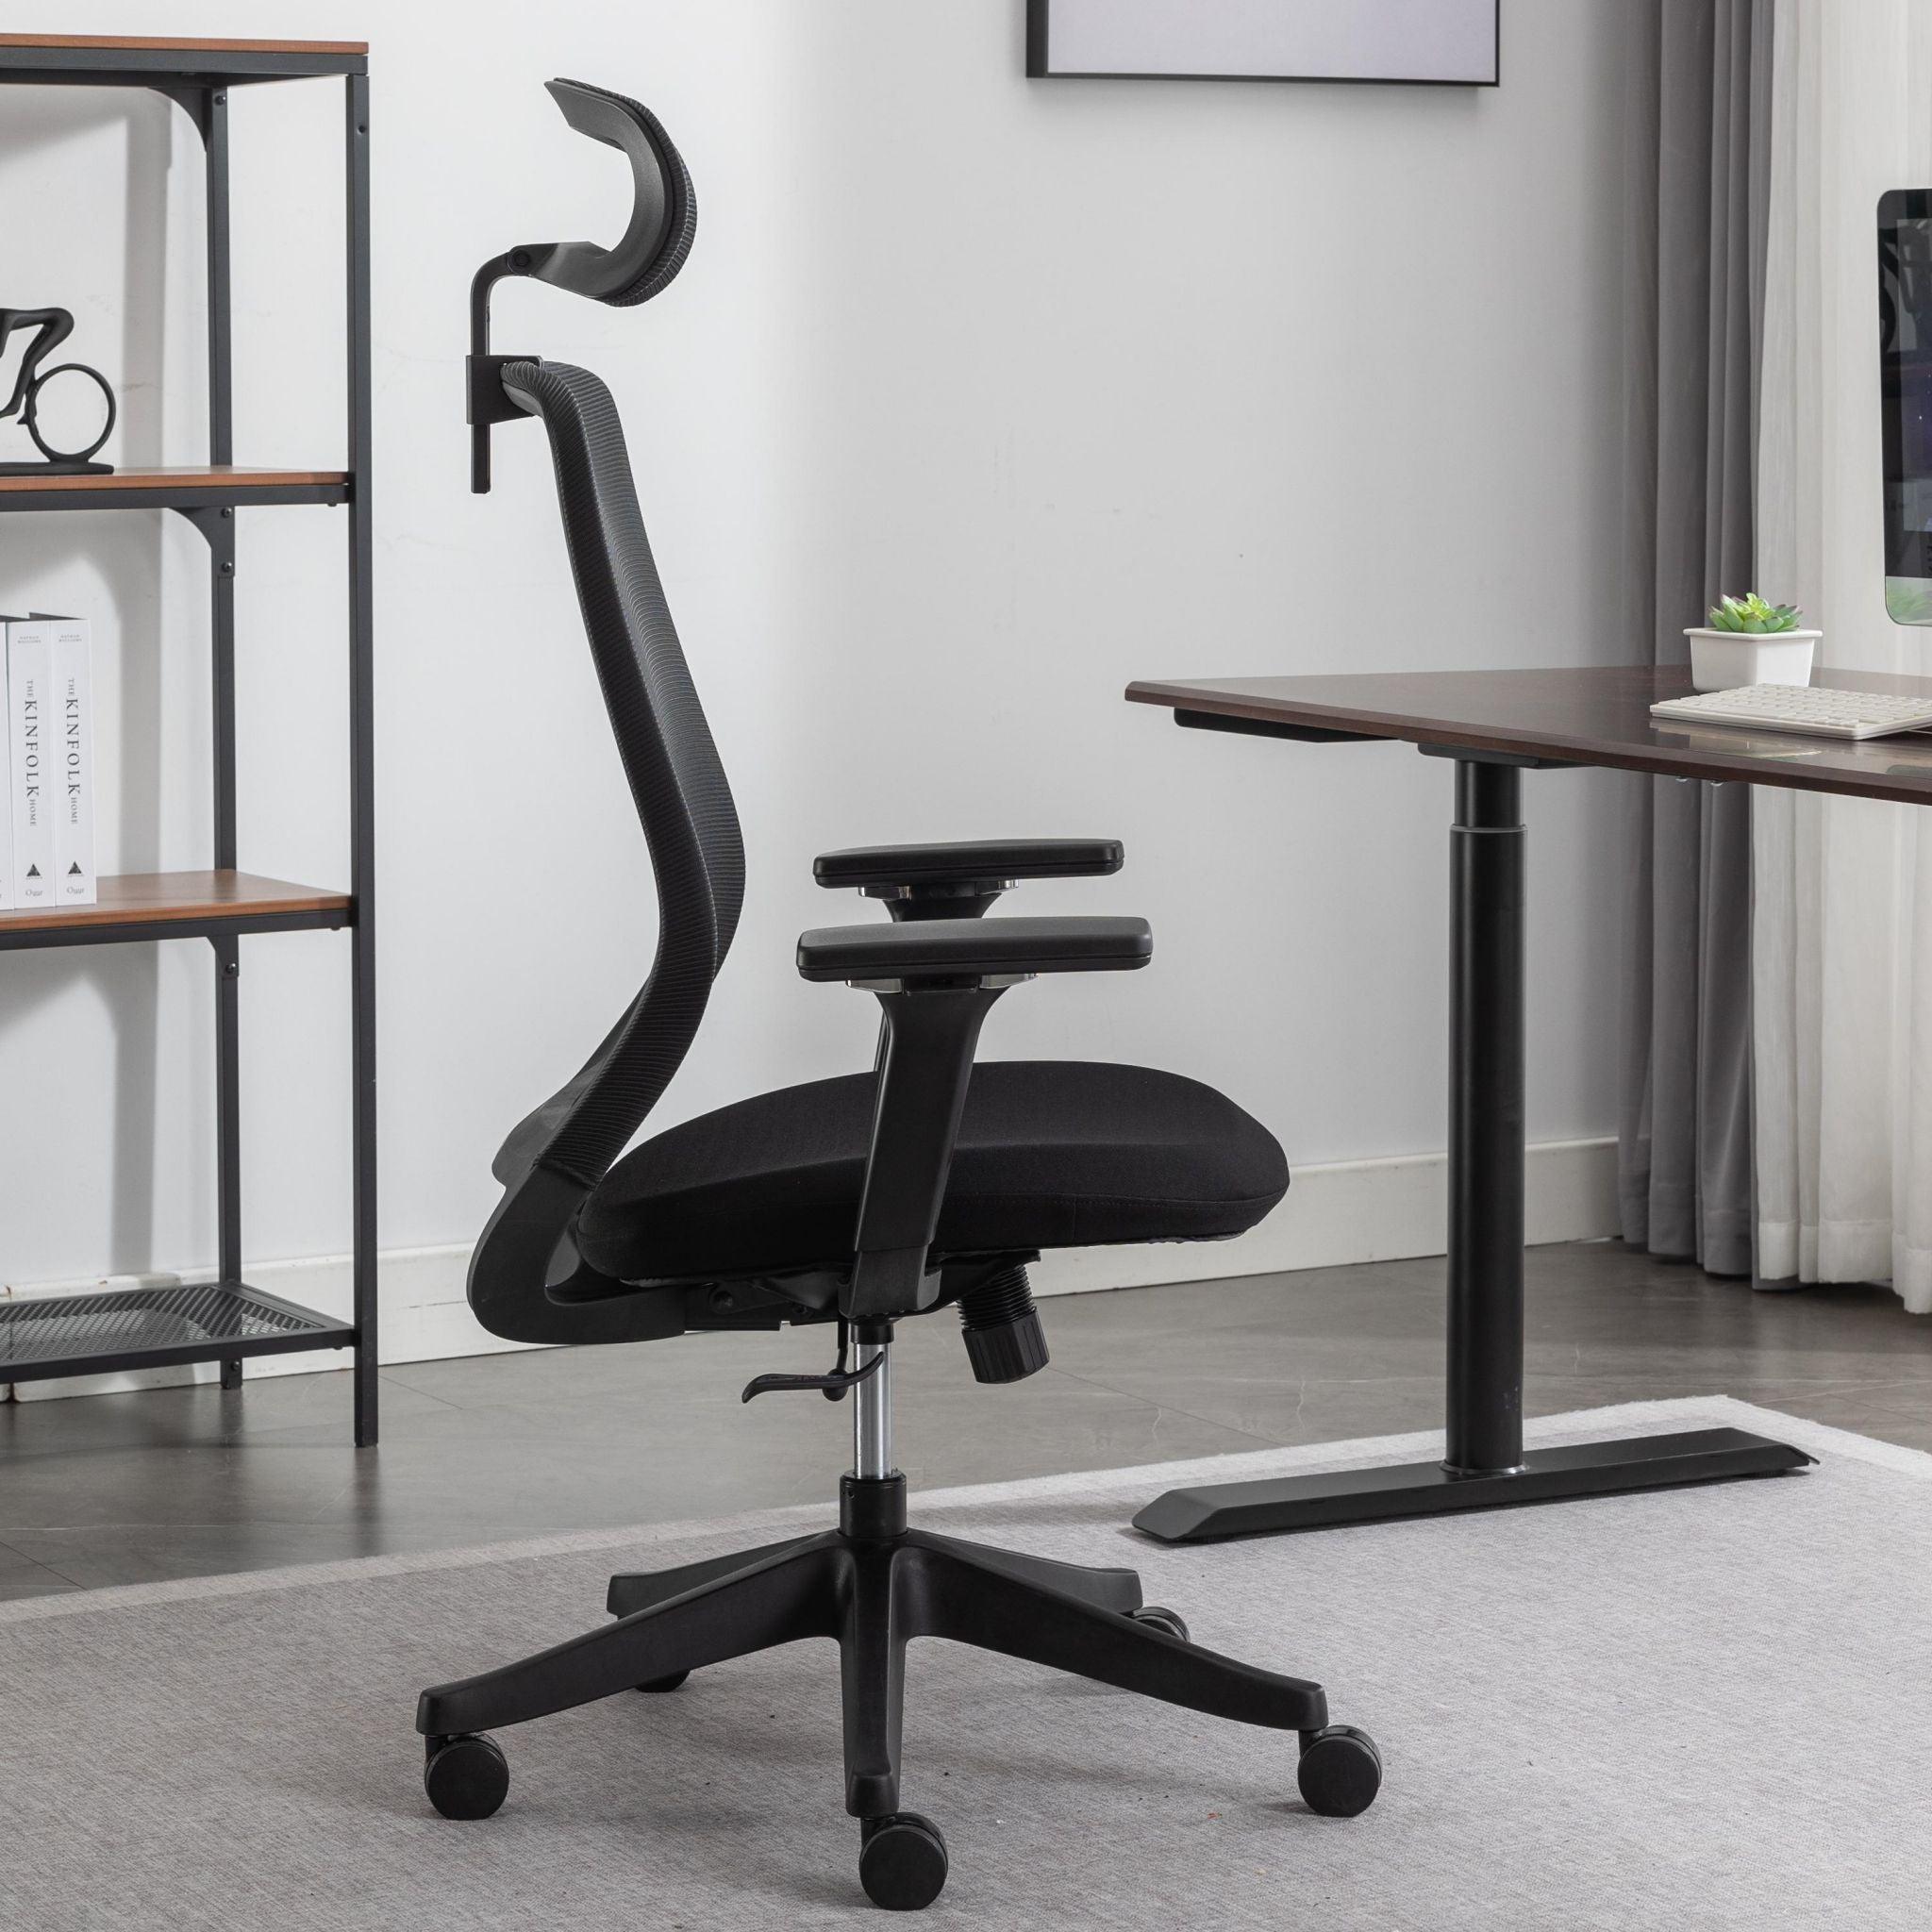 Ergonomic Office Chair Core 3111 - Honsit Chair